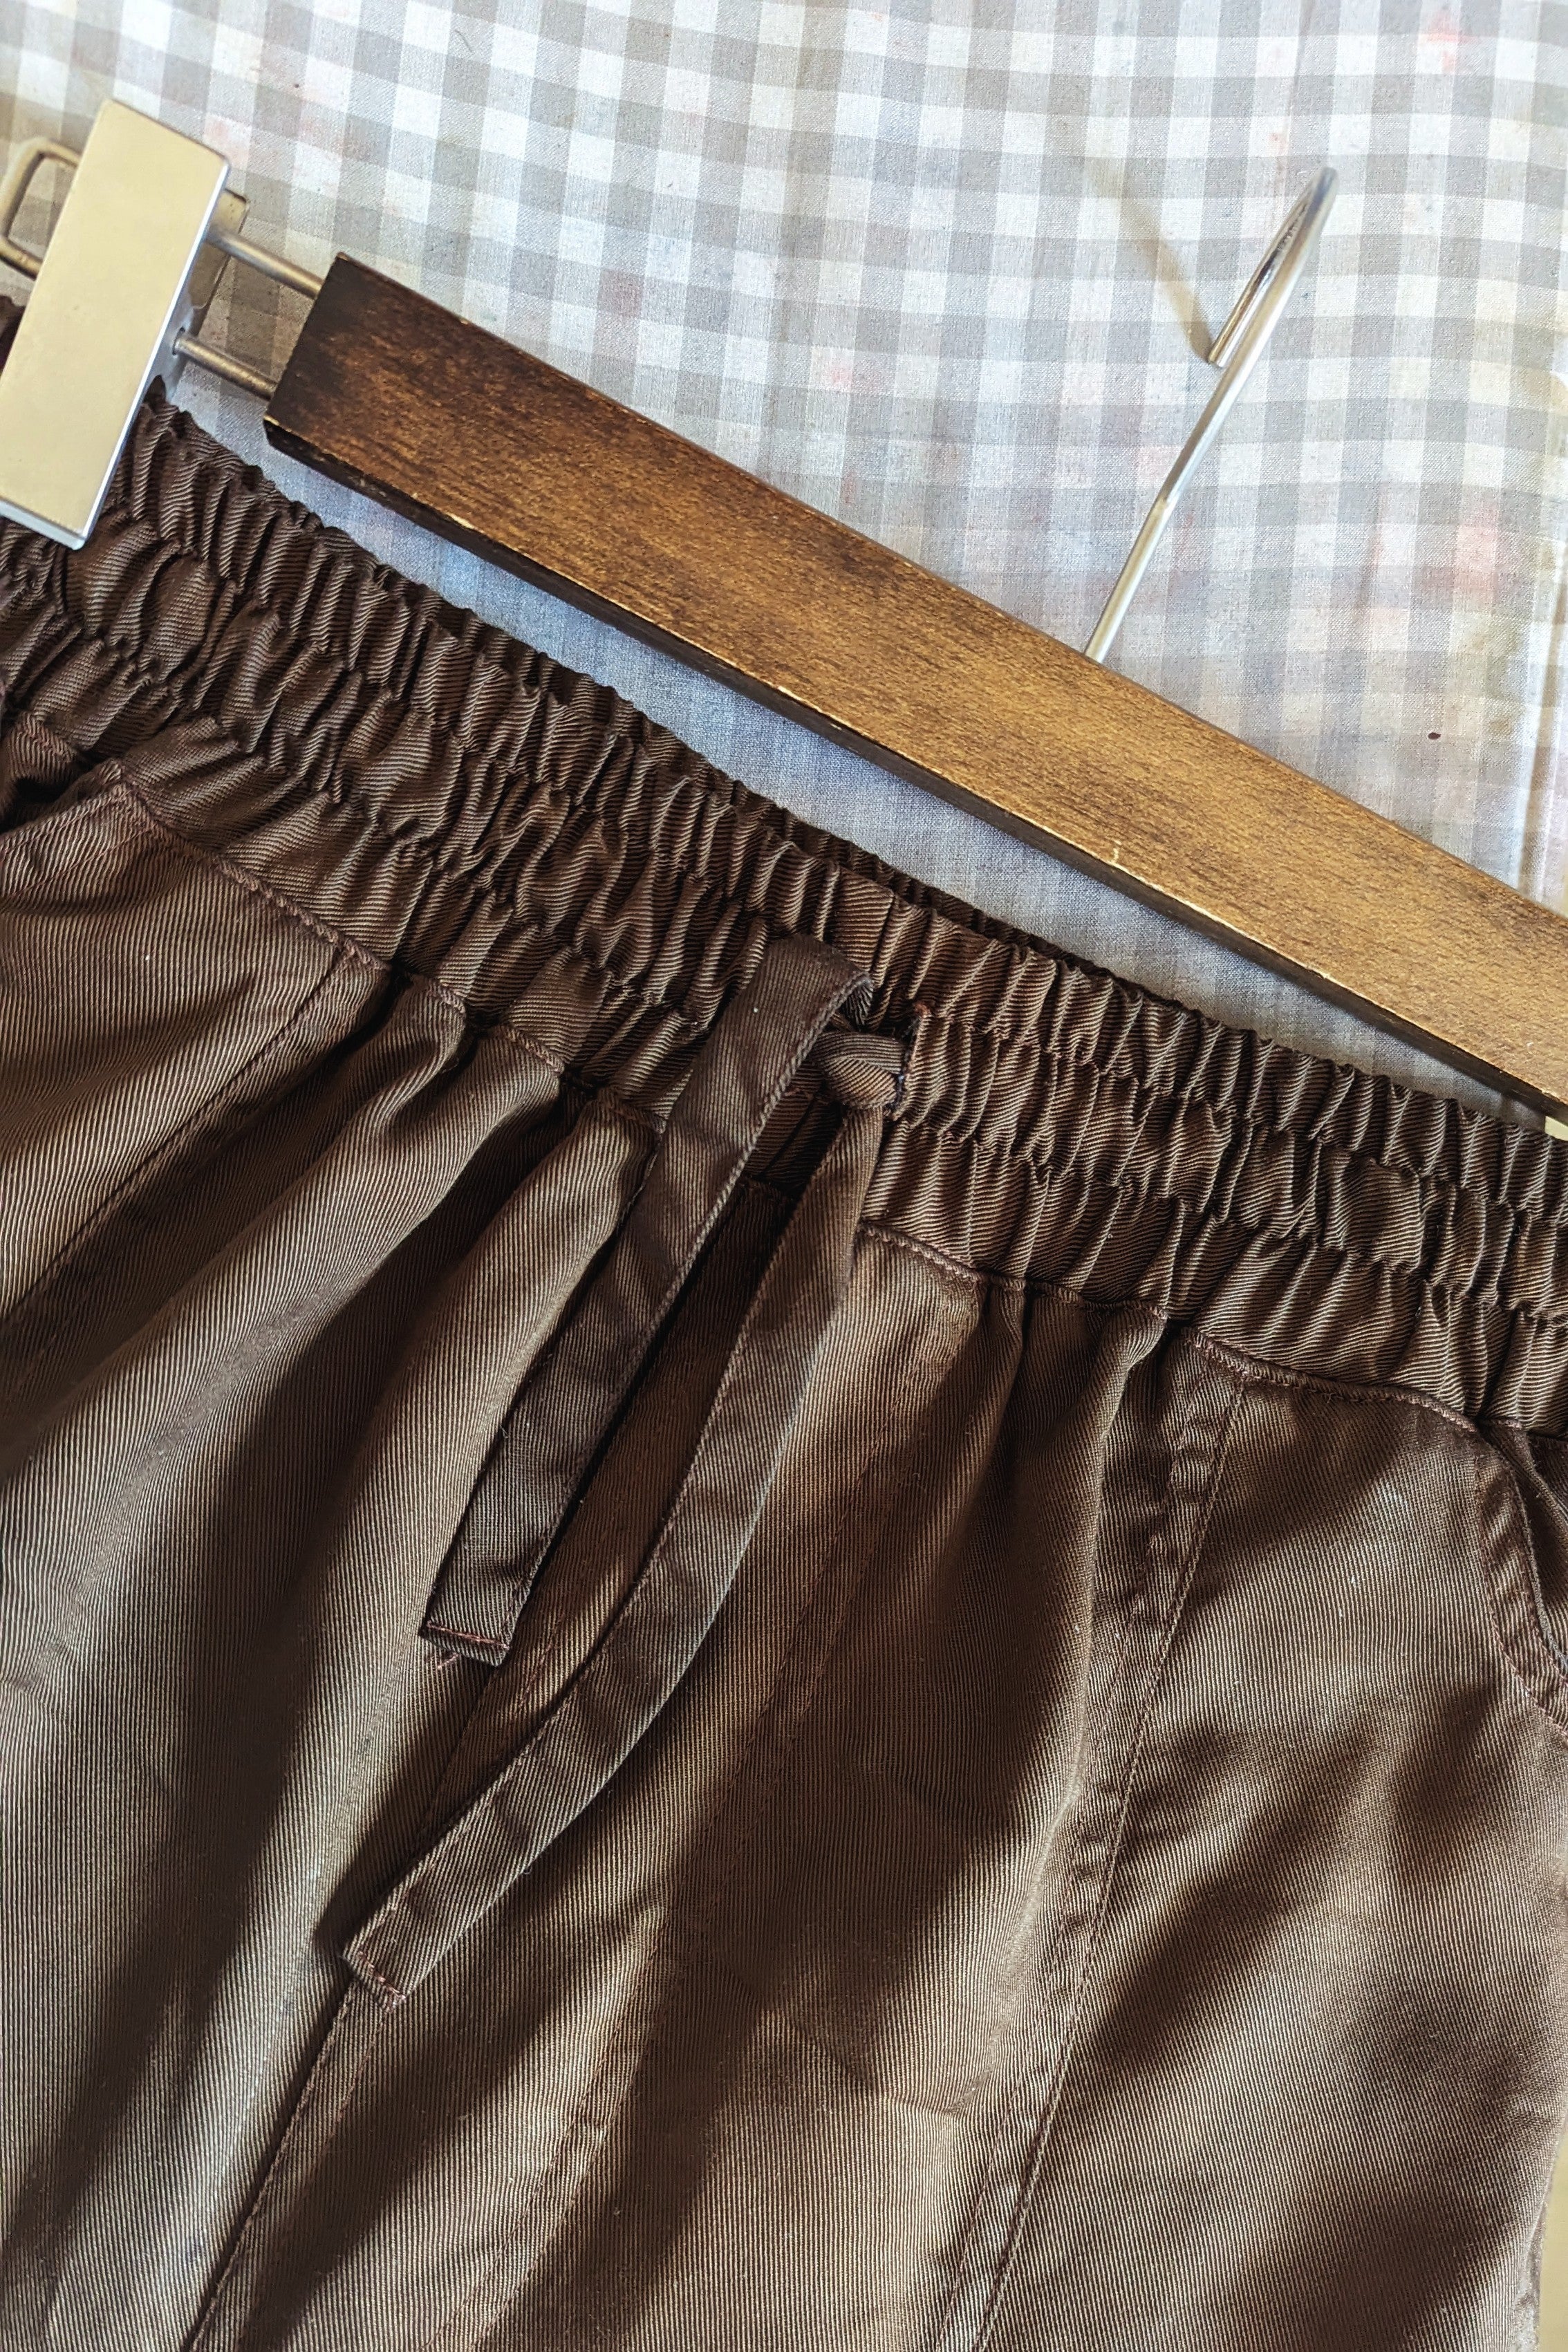 Best Medium Brown Color pants | Men's Clothing Forums